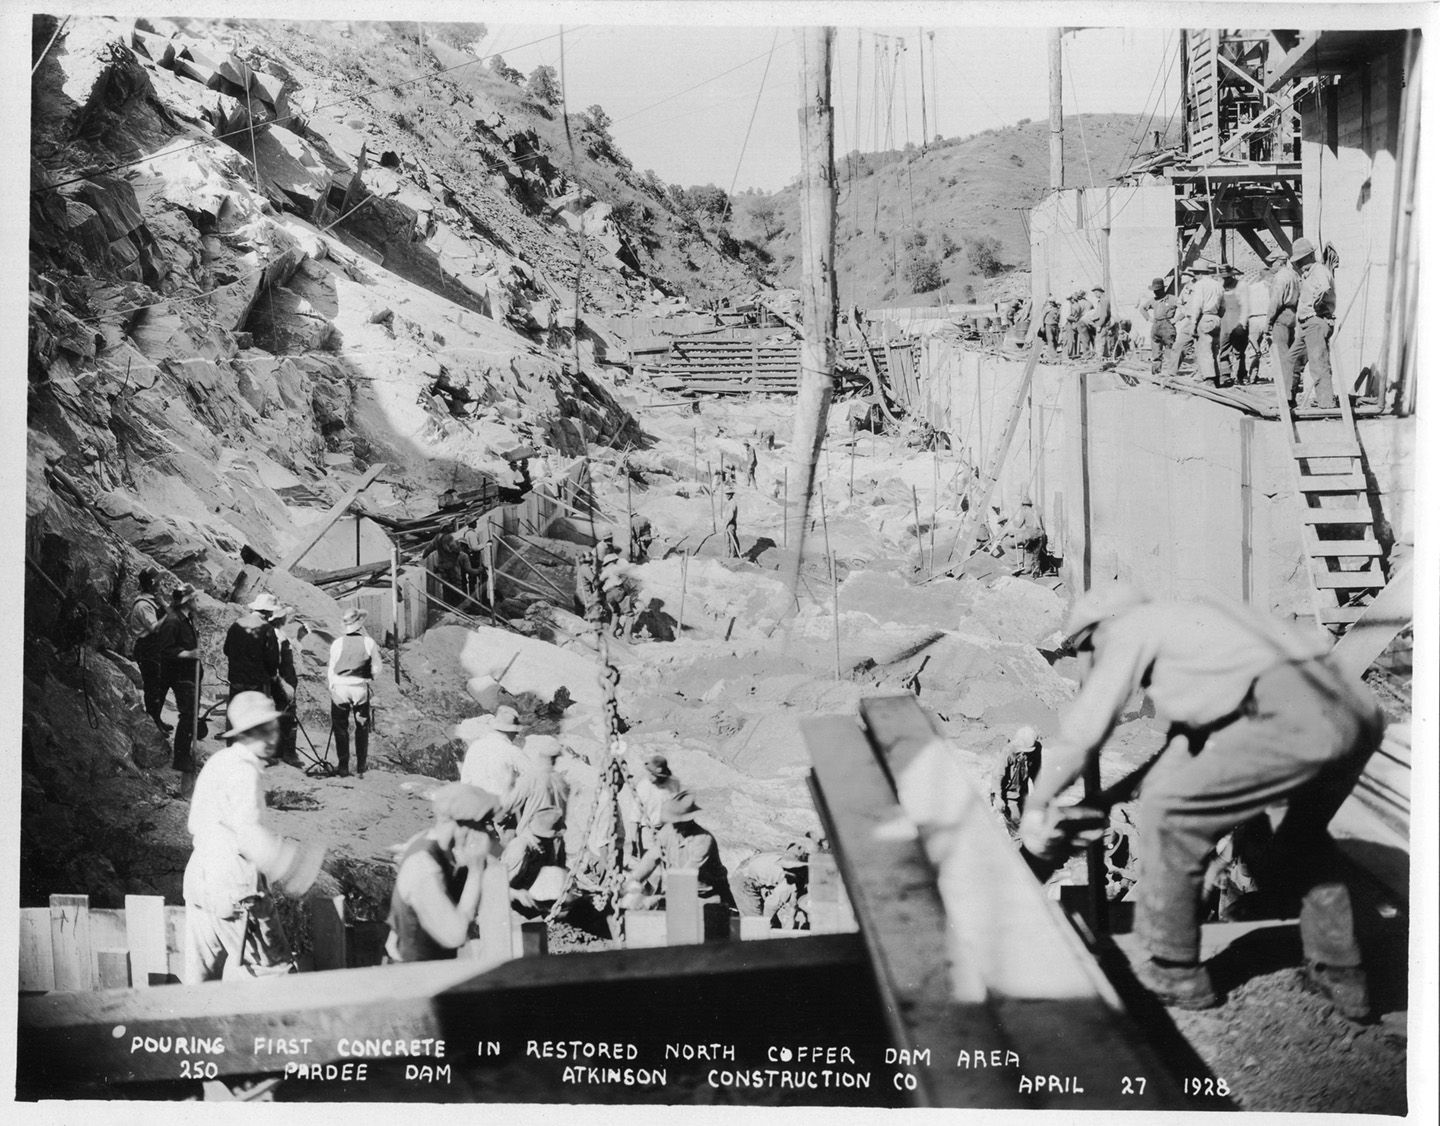 Pouring first concrete in restored north coffer dam area. (April 1928)